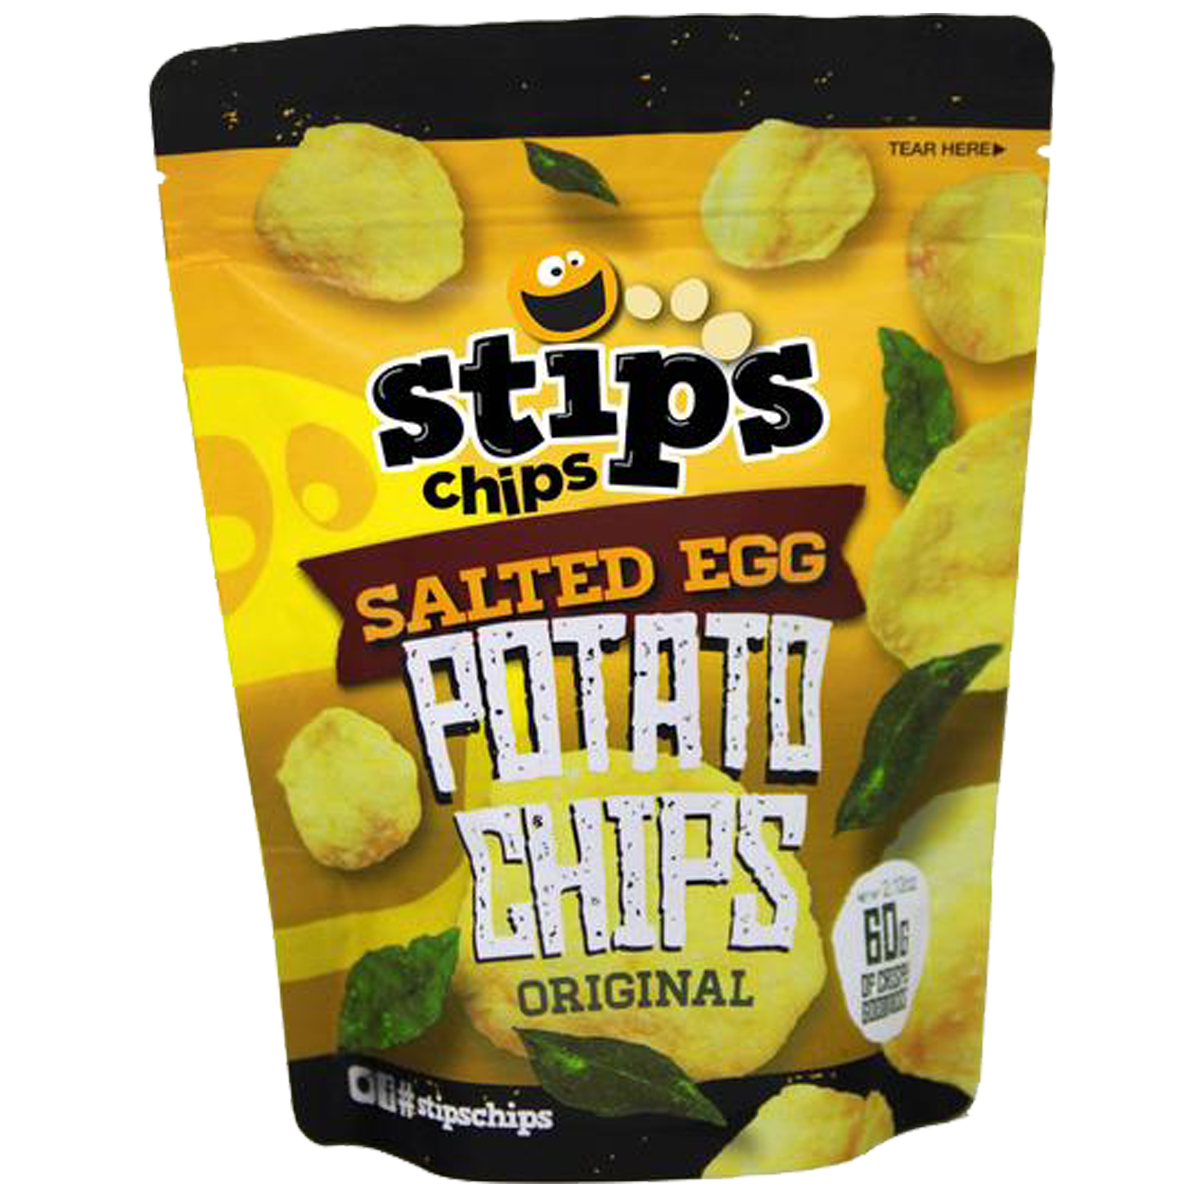 Stip’s Chips Salted Egg Potato Chips Original 60g